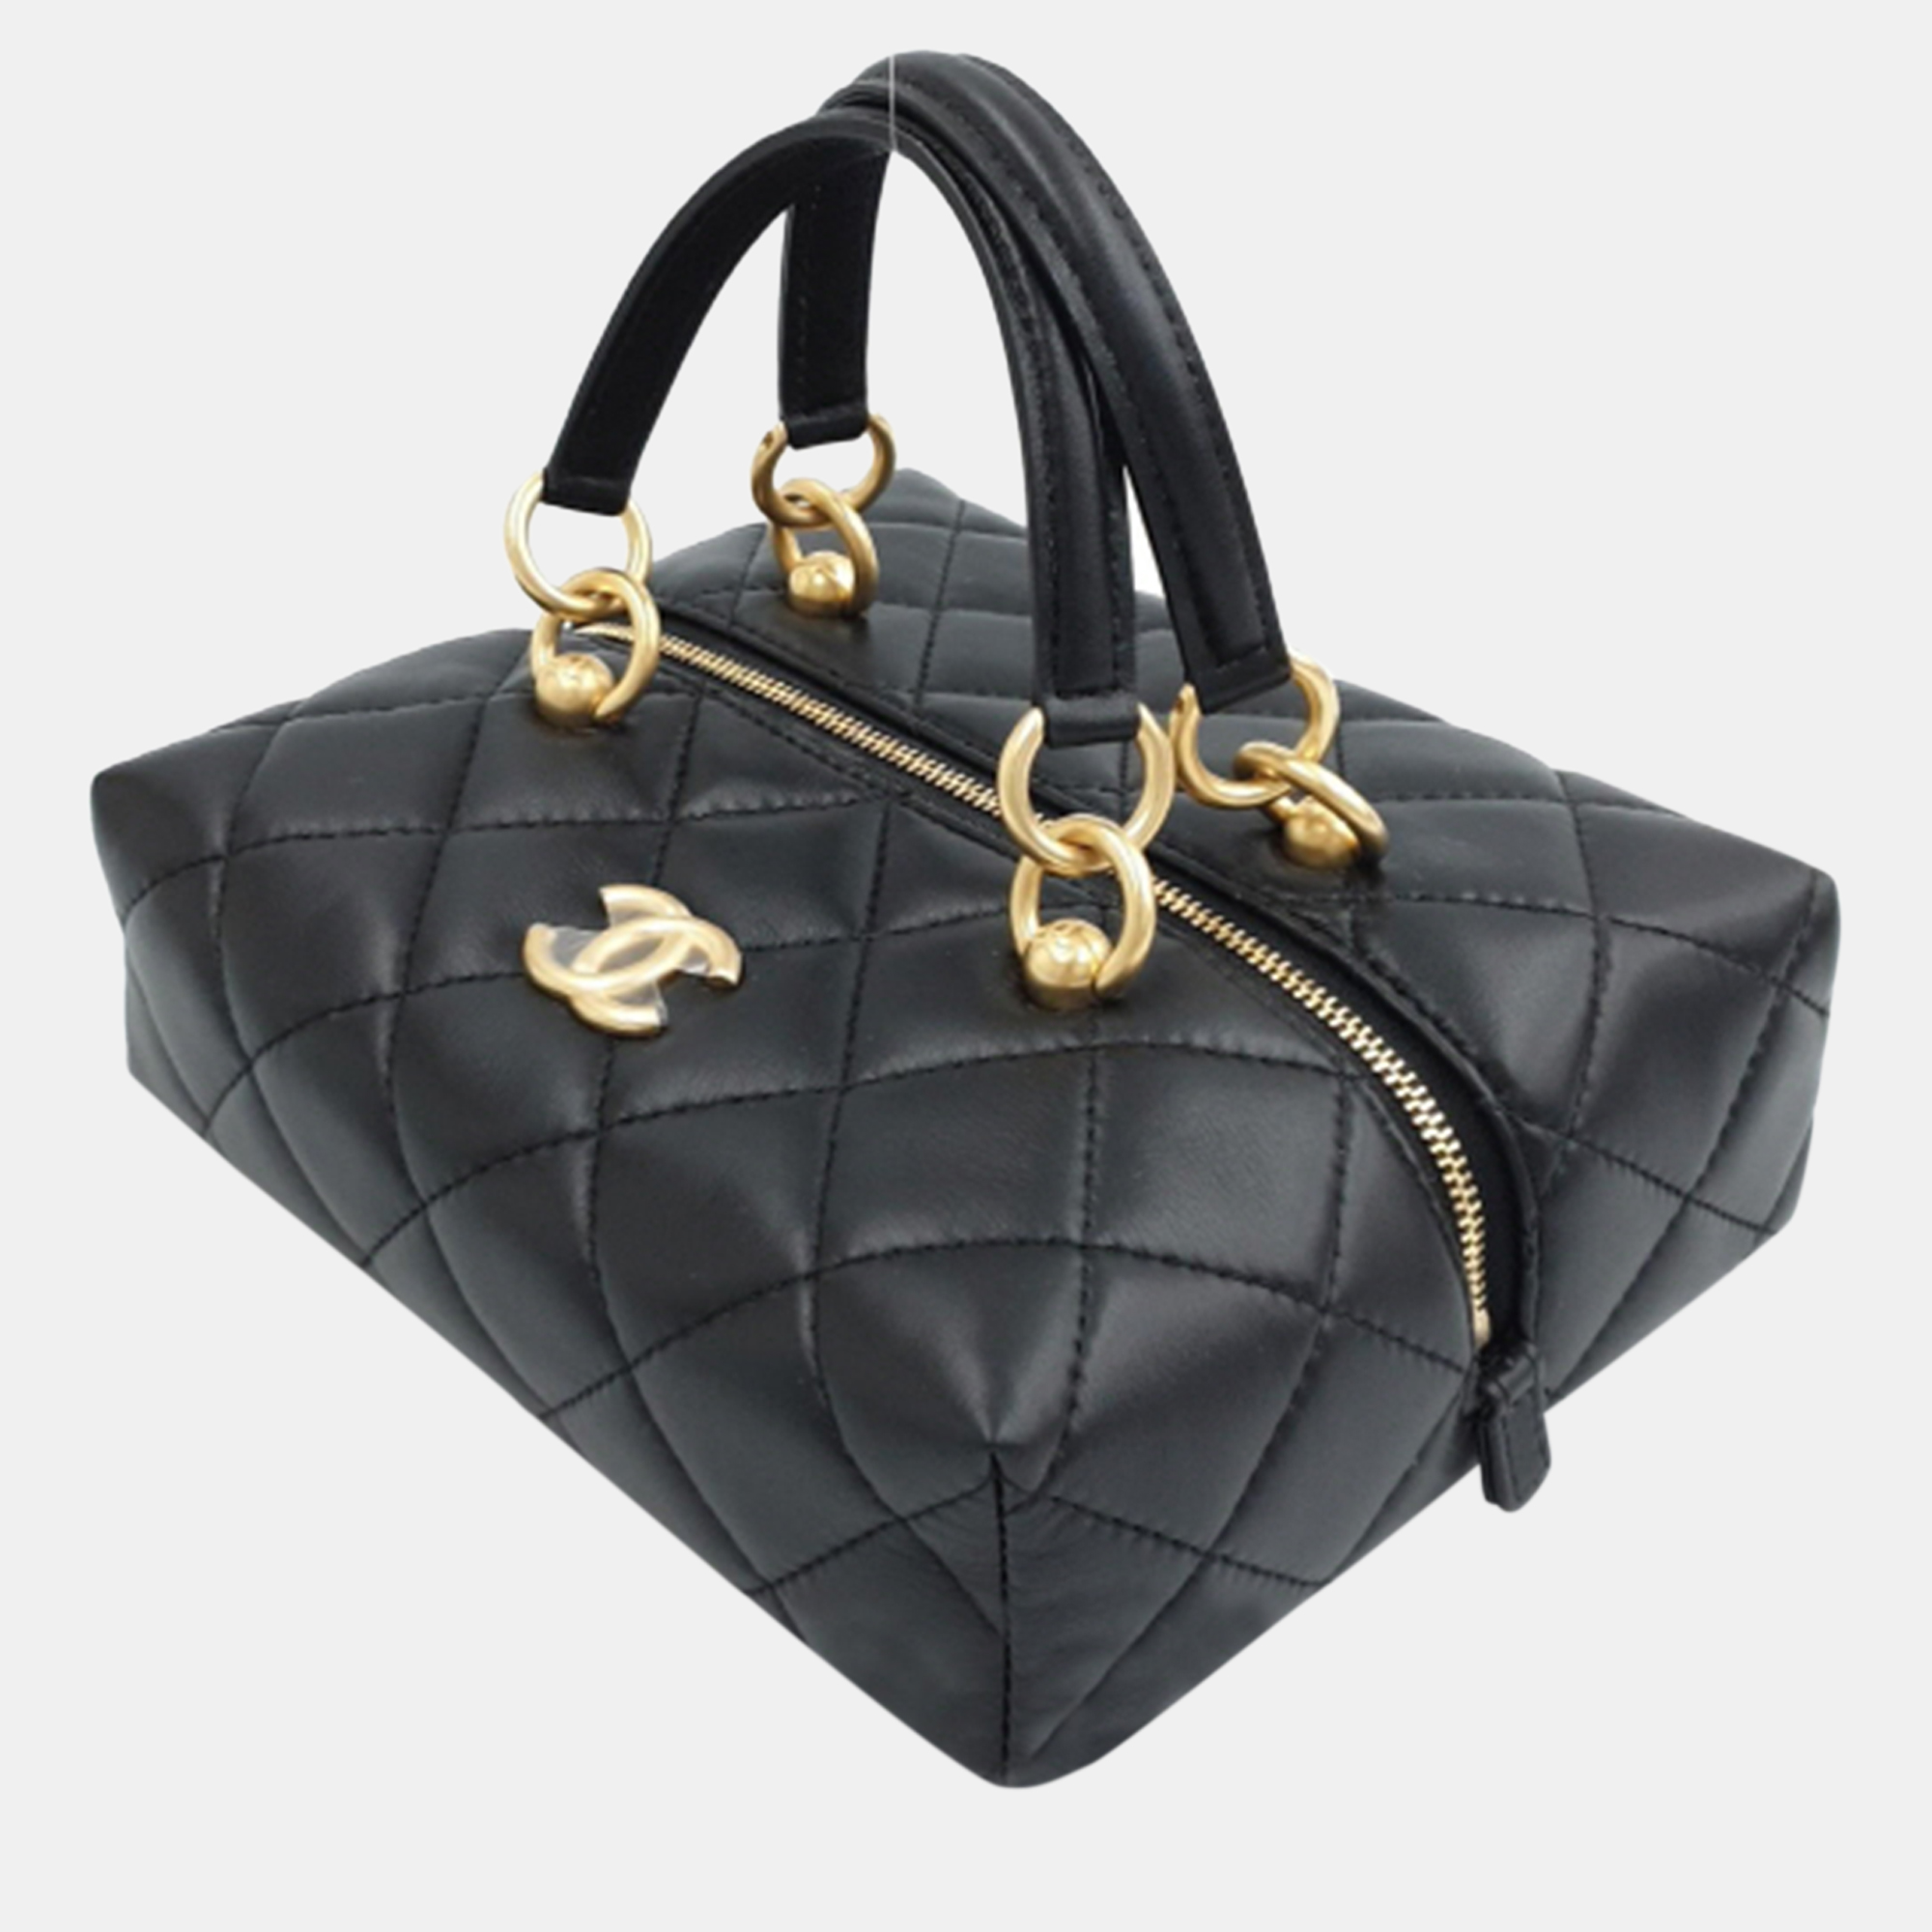 Chanel Tote And Shoulder Bag